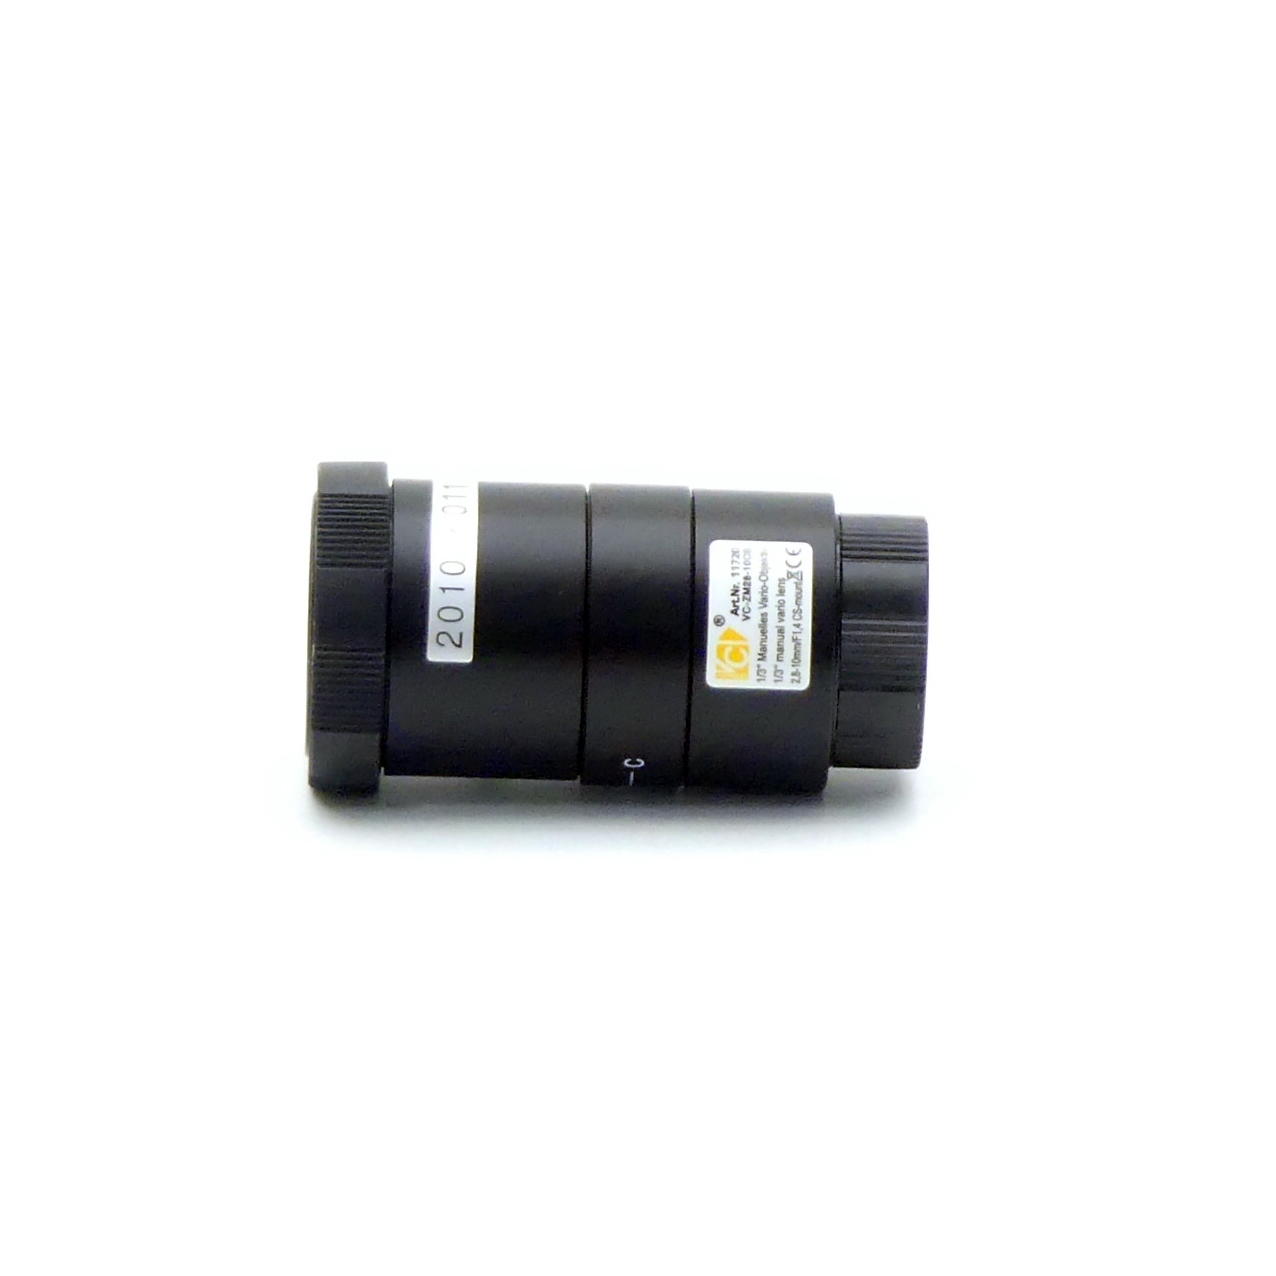 Manual varifocal lens VC-ZM28-10CS 